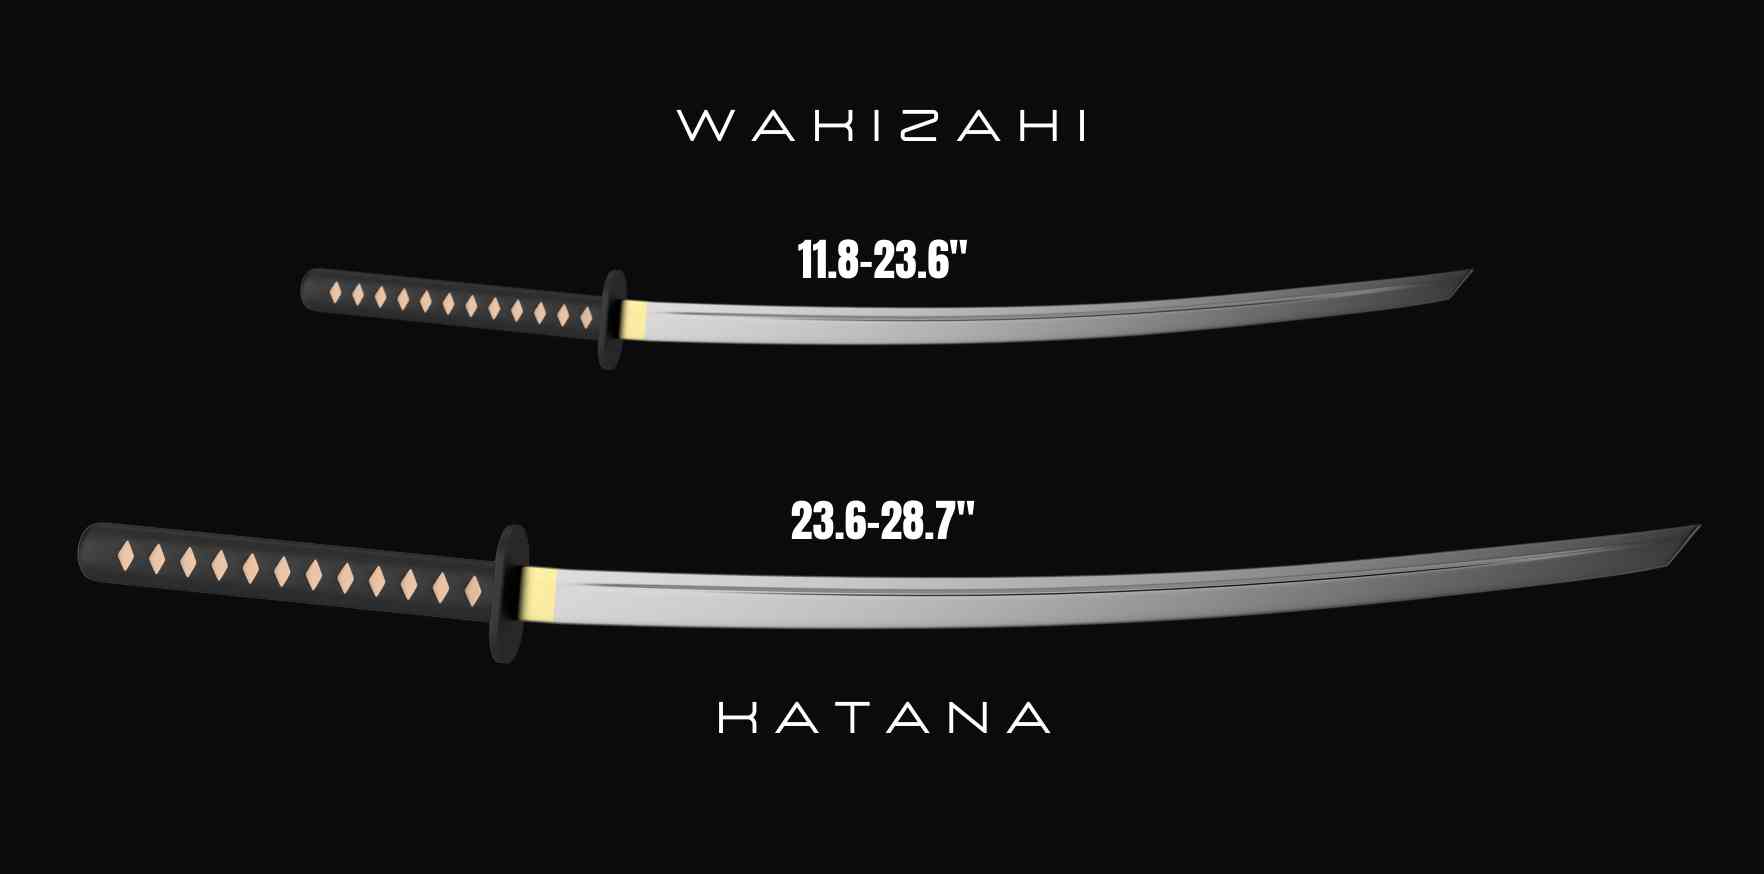 wakizashi vs katana blade comparison